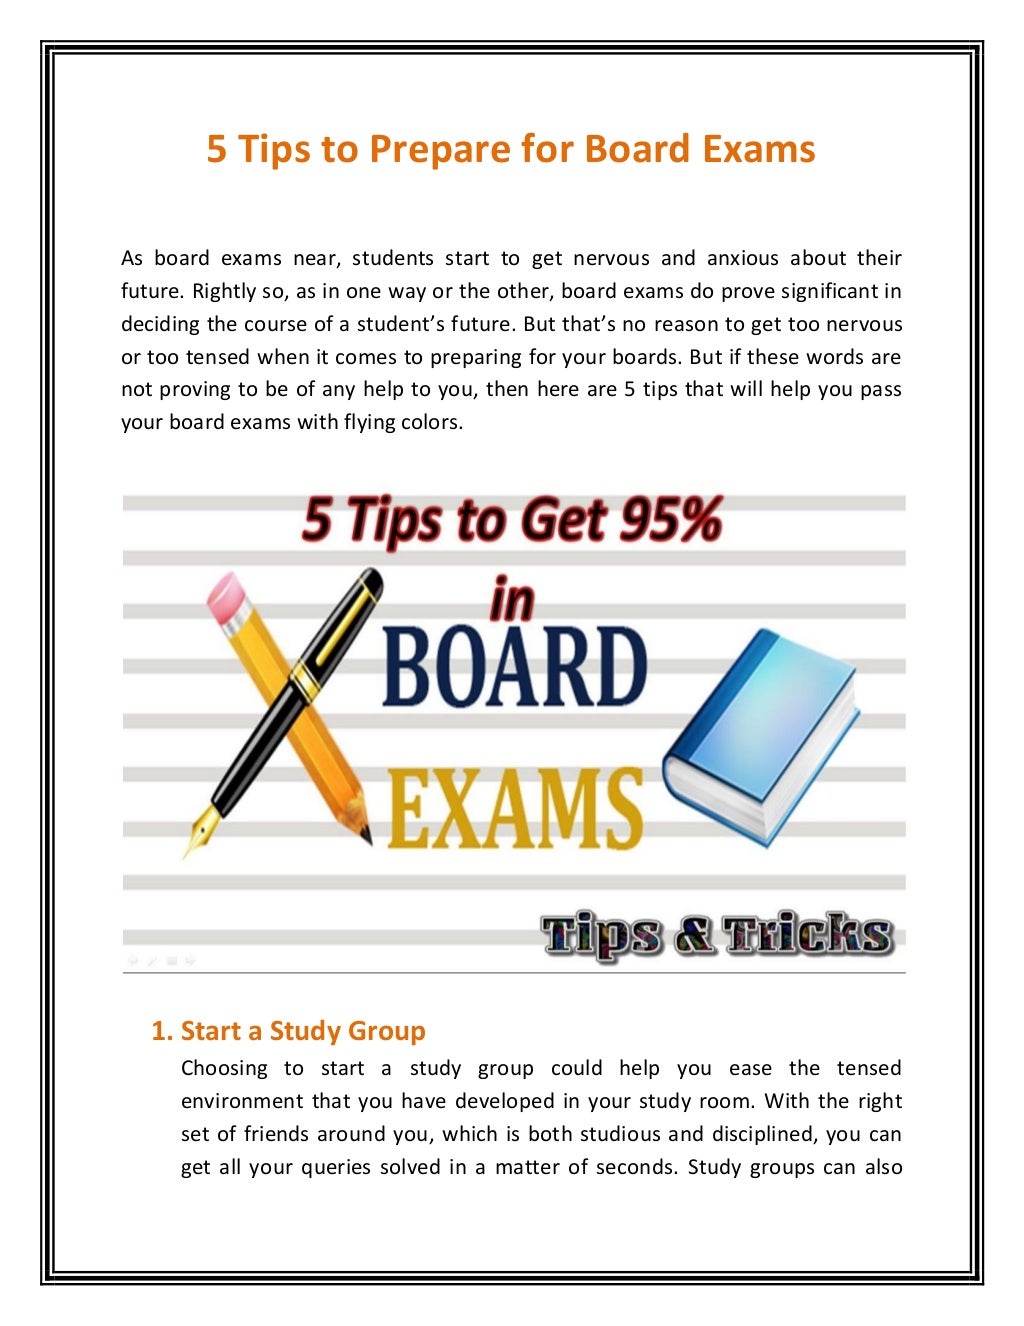 essay on preparation for board examination